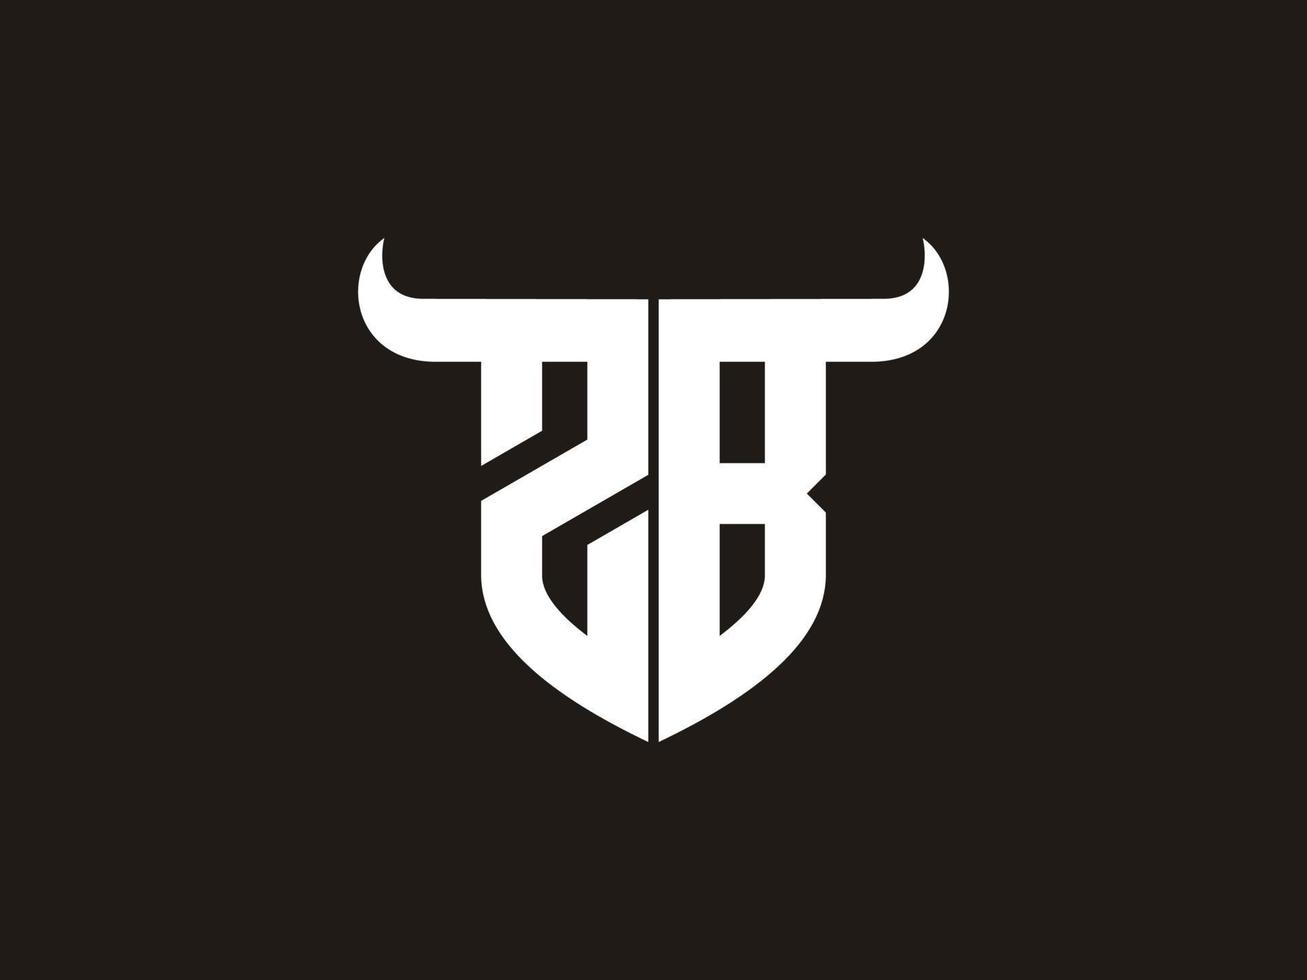 anfängliches zb-bull-logo-design. vektor